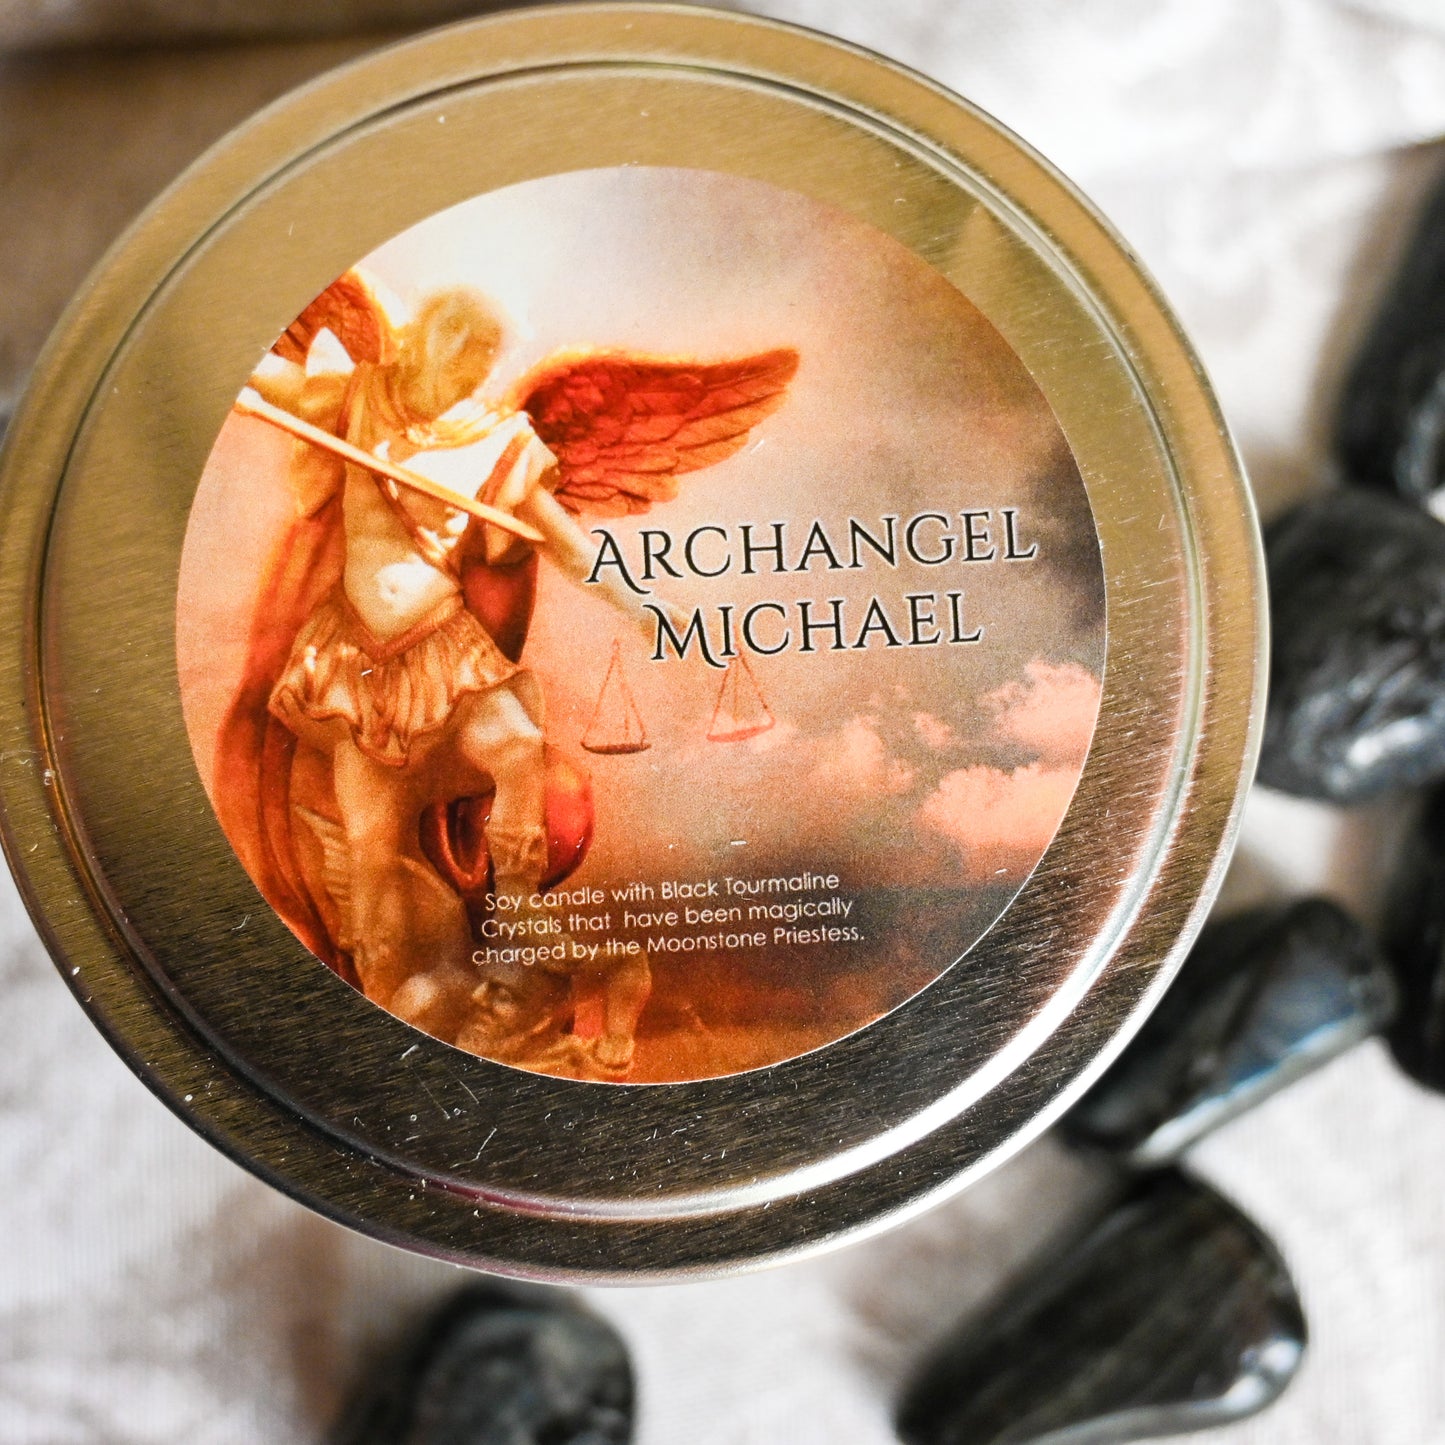 Archangel Michael Candle with Black Tourmaline Travel Tin 6oz